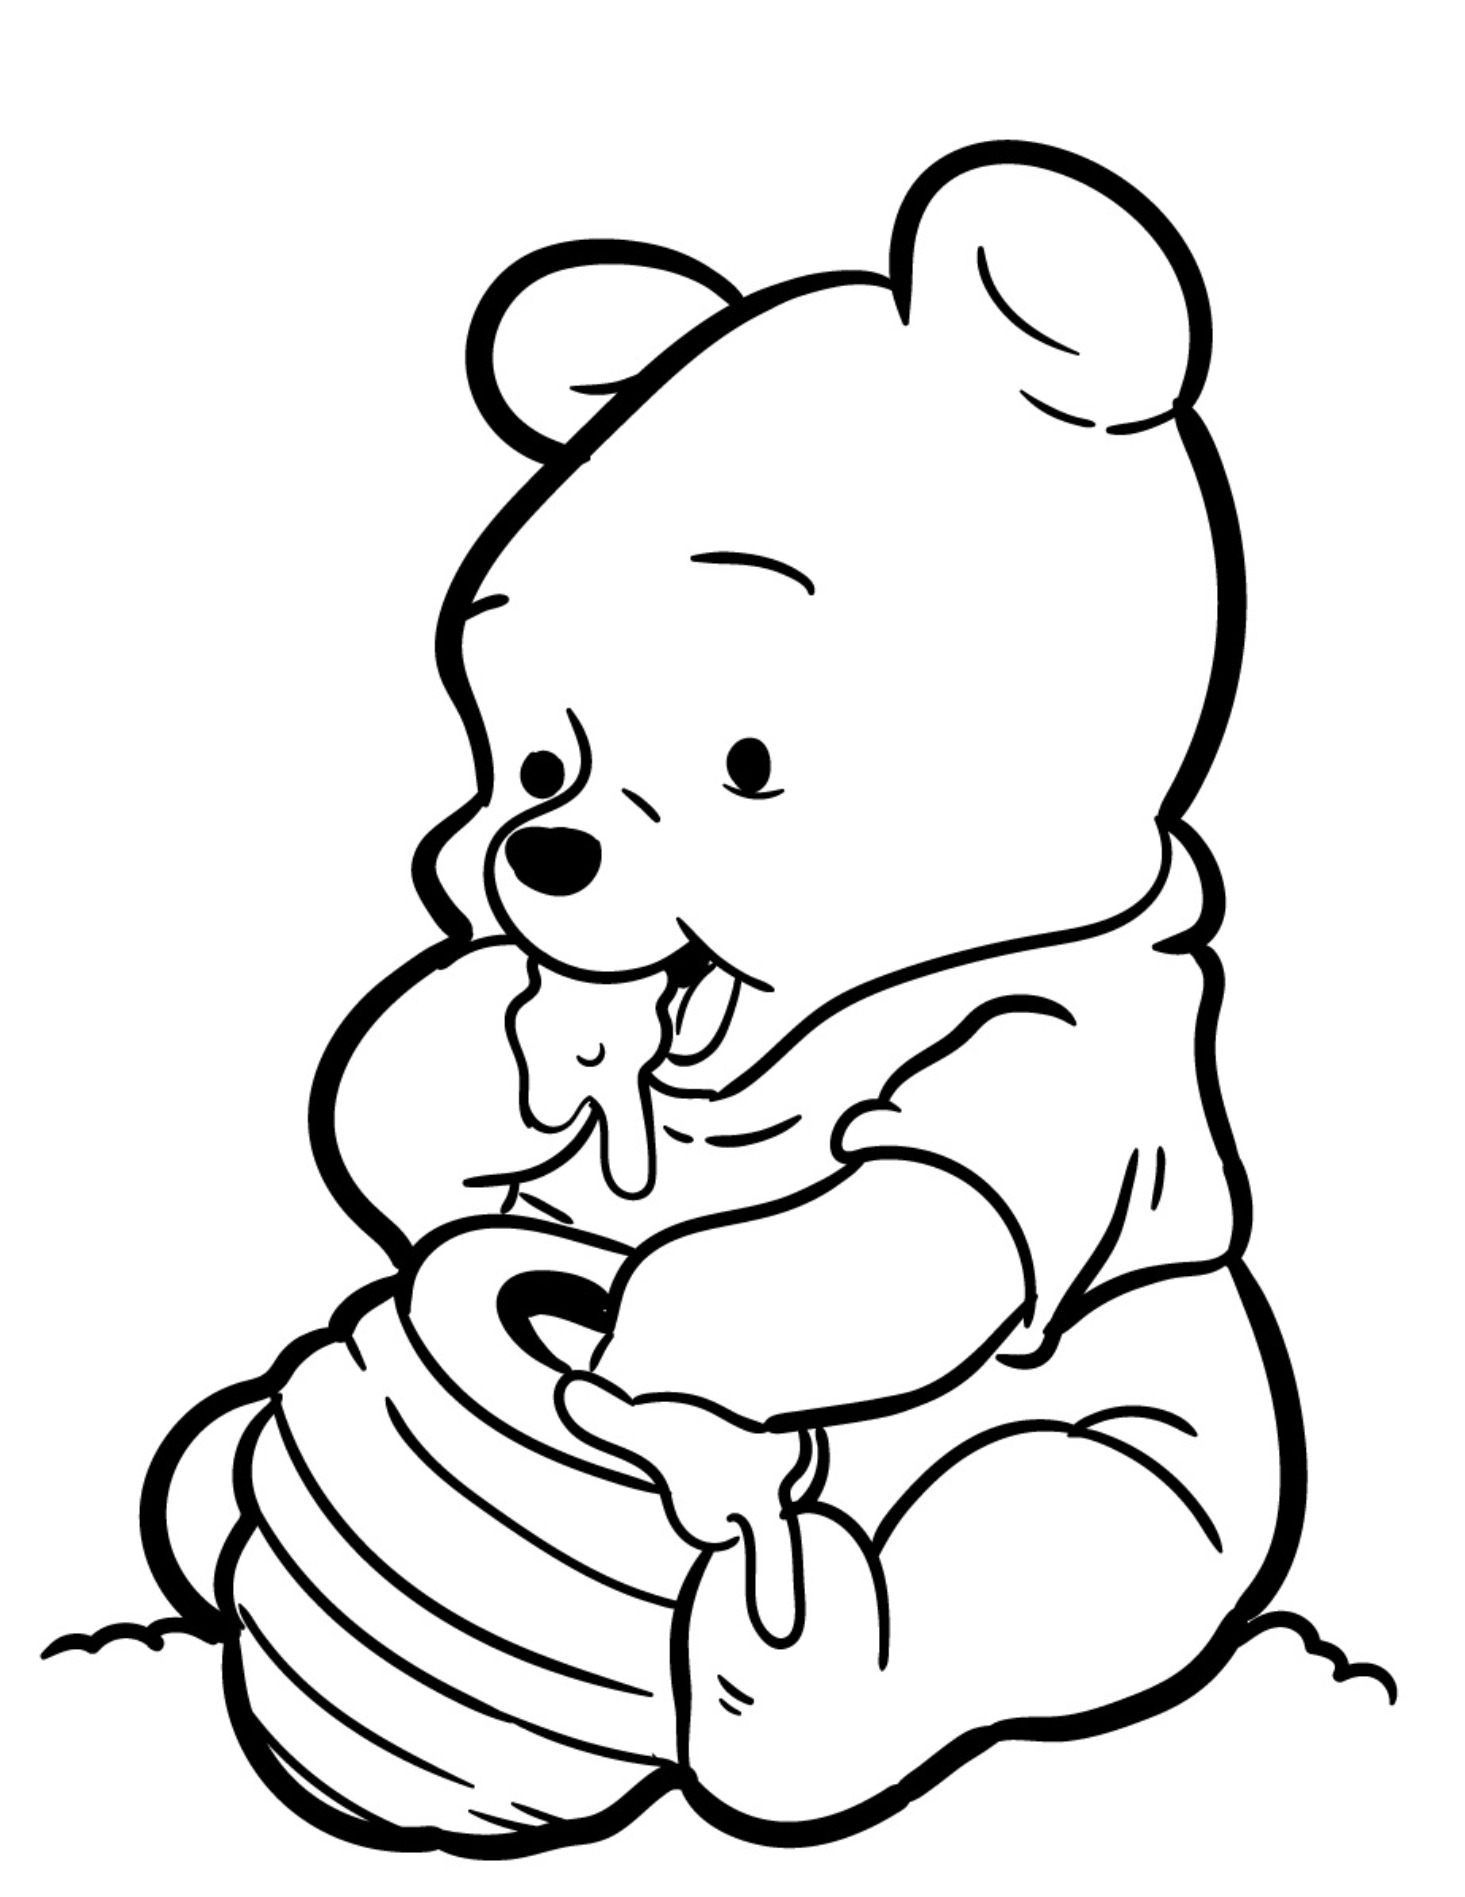 Winnie The Pooh eating honey painting page Black White - SheetalColor.com